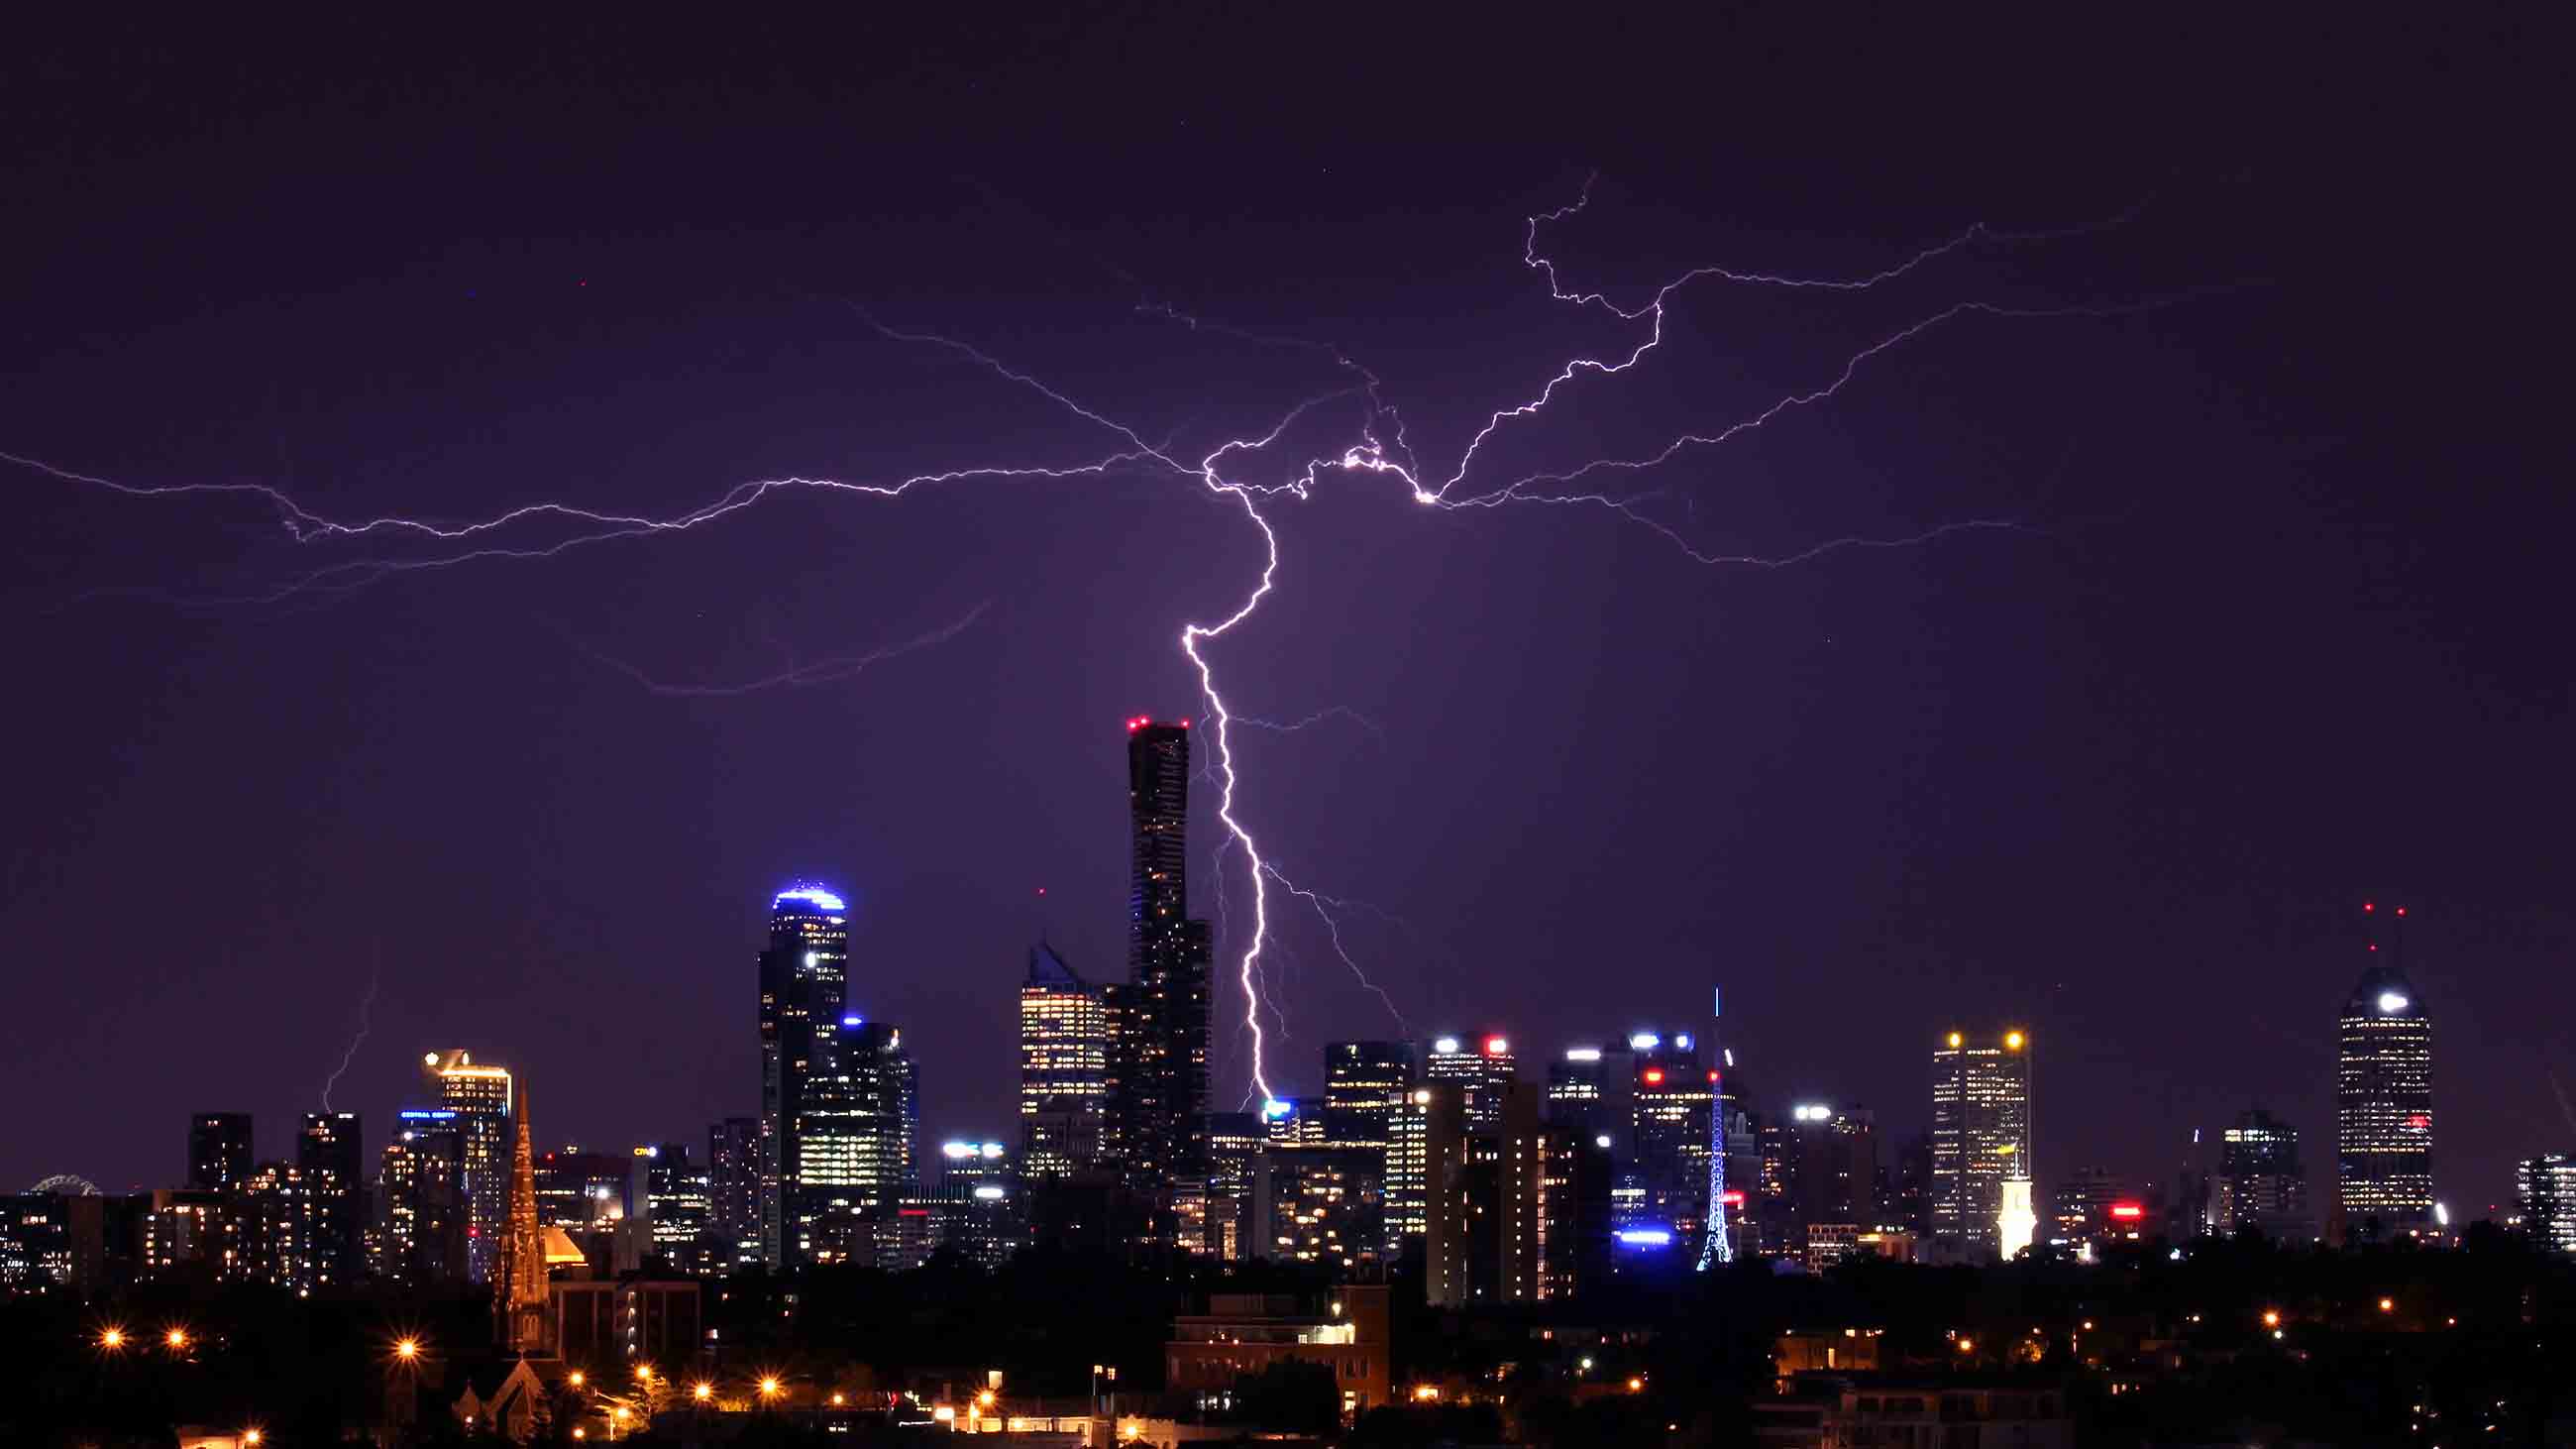 Powerful Lightning striking over Melbourne City